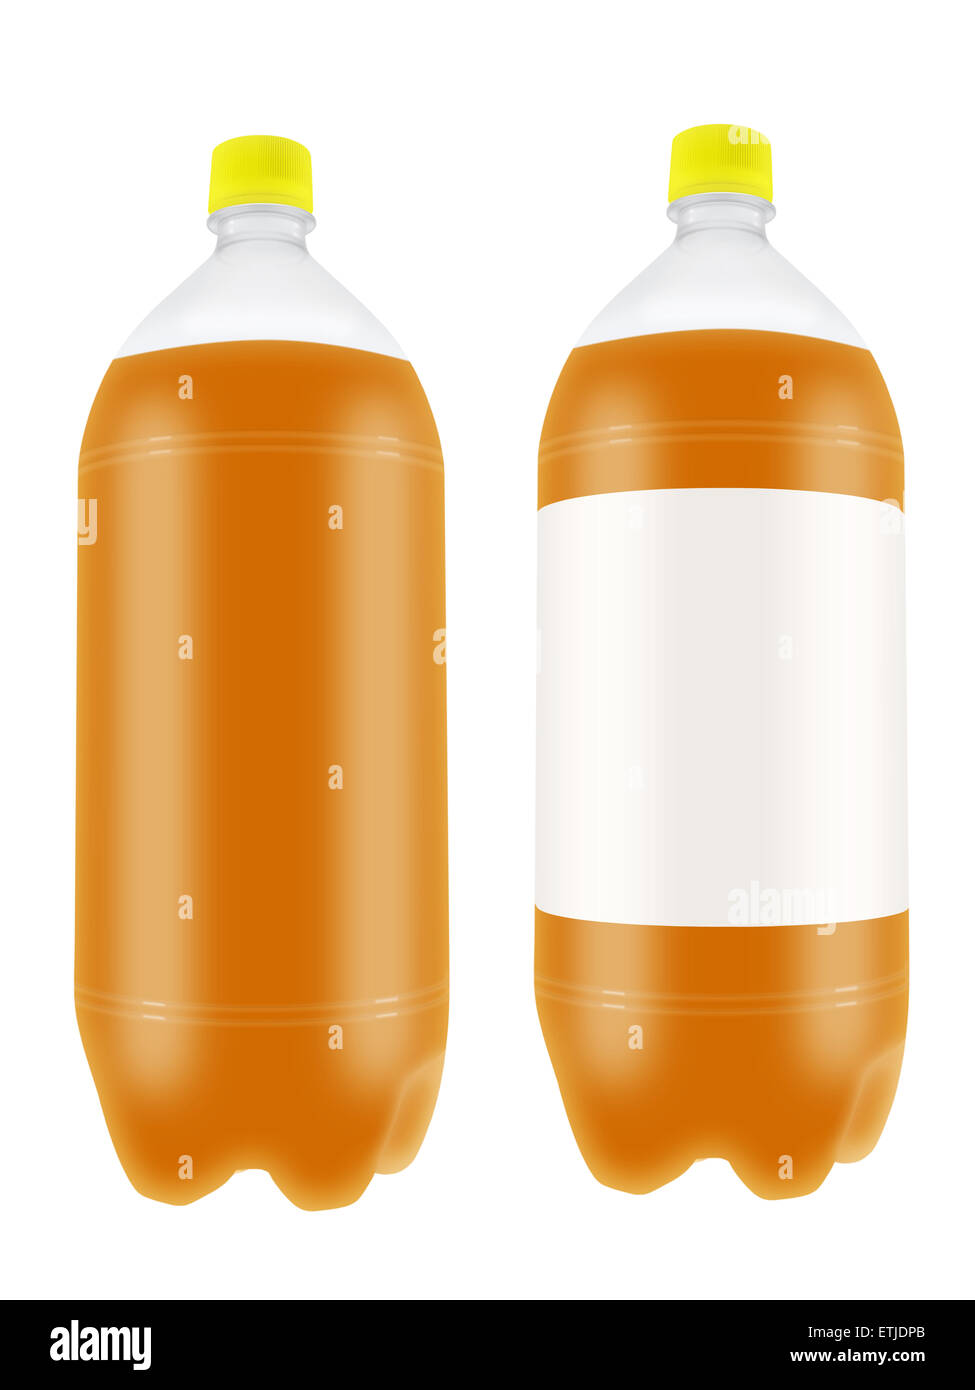 https://c8.alamy.com/compes/etjdpb/refrescante-bebida-de-naranja-en-botellas-de-plastico-aislado-sobre-fondo-blanco-ilustracion-muy-detallada-etjdpb.jpg